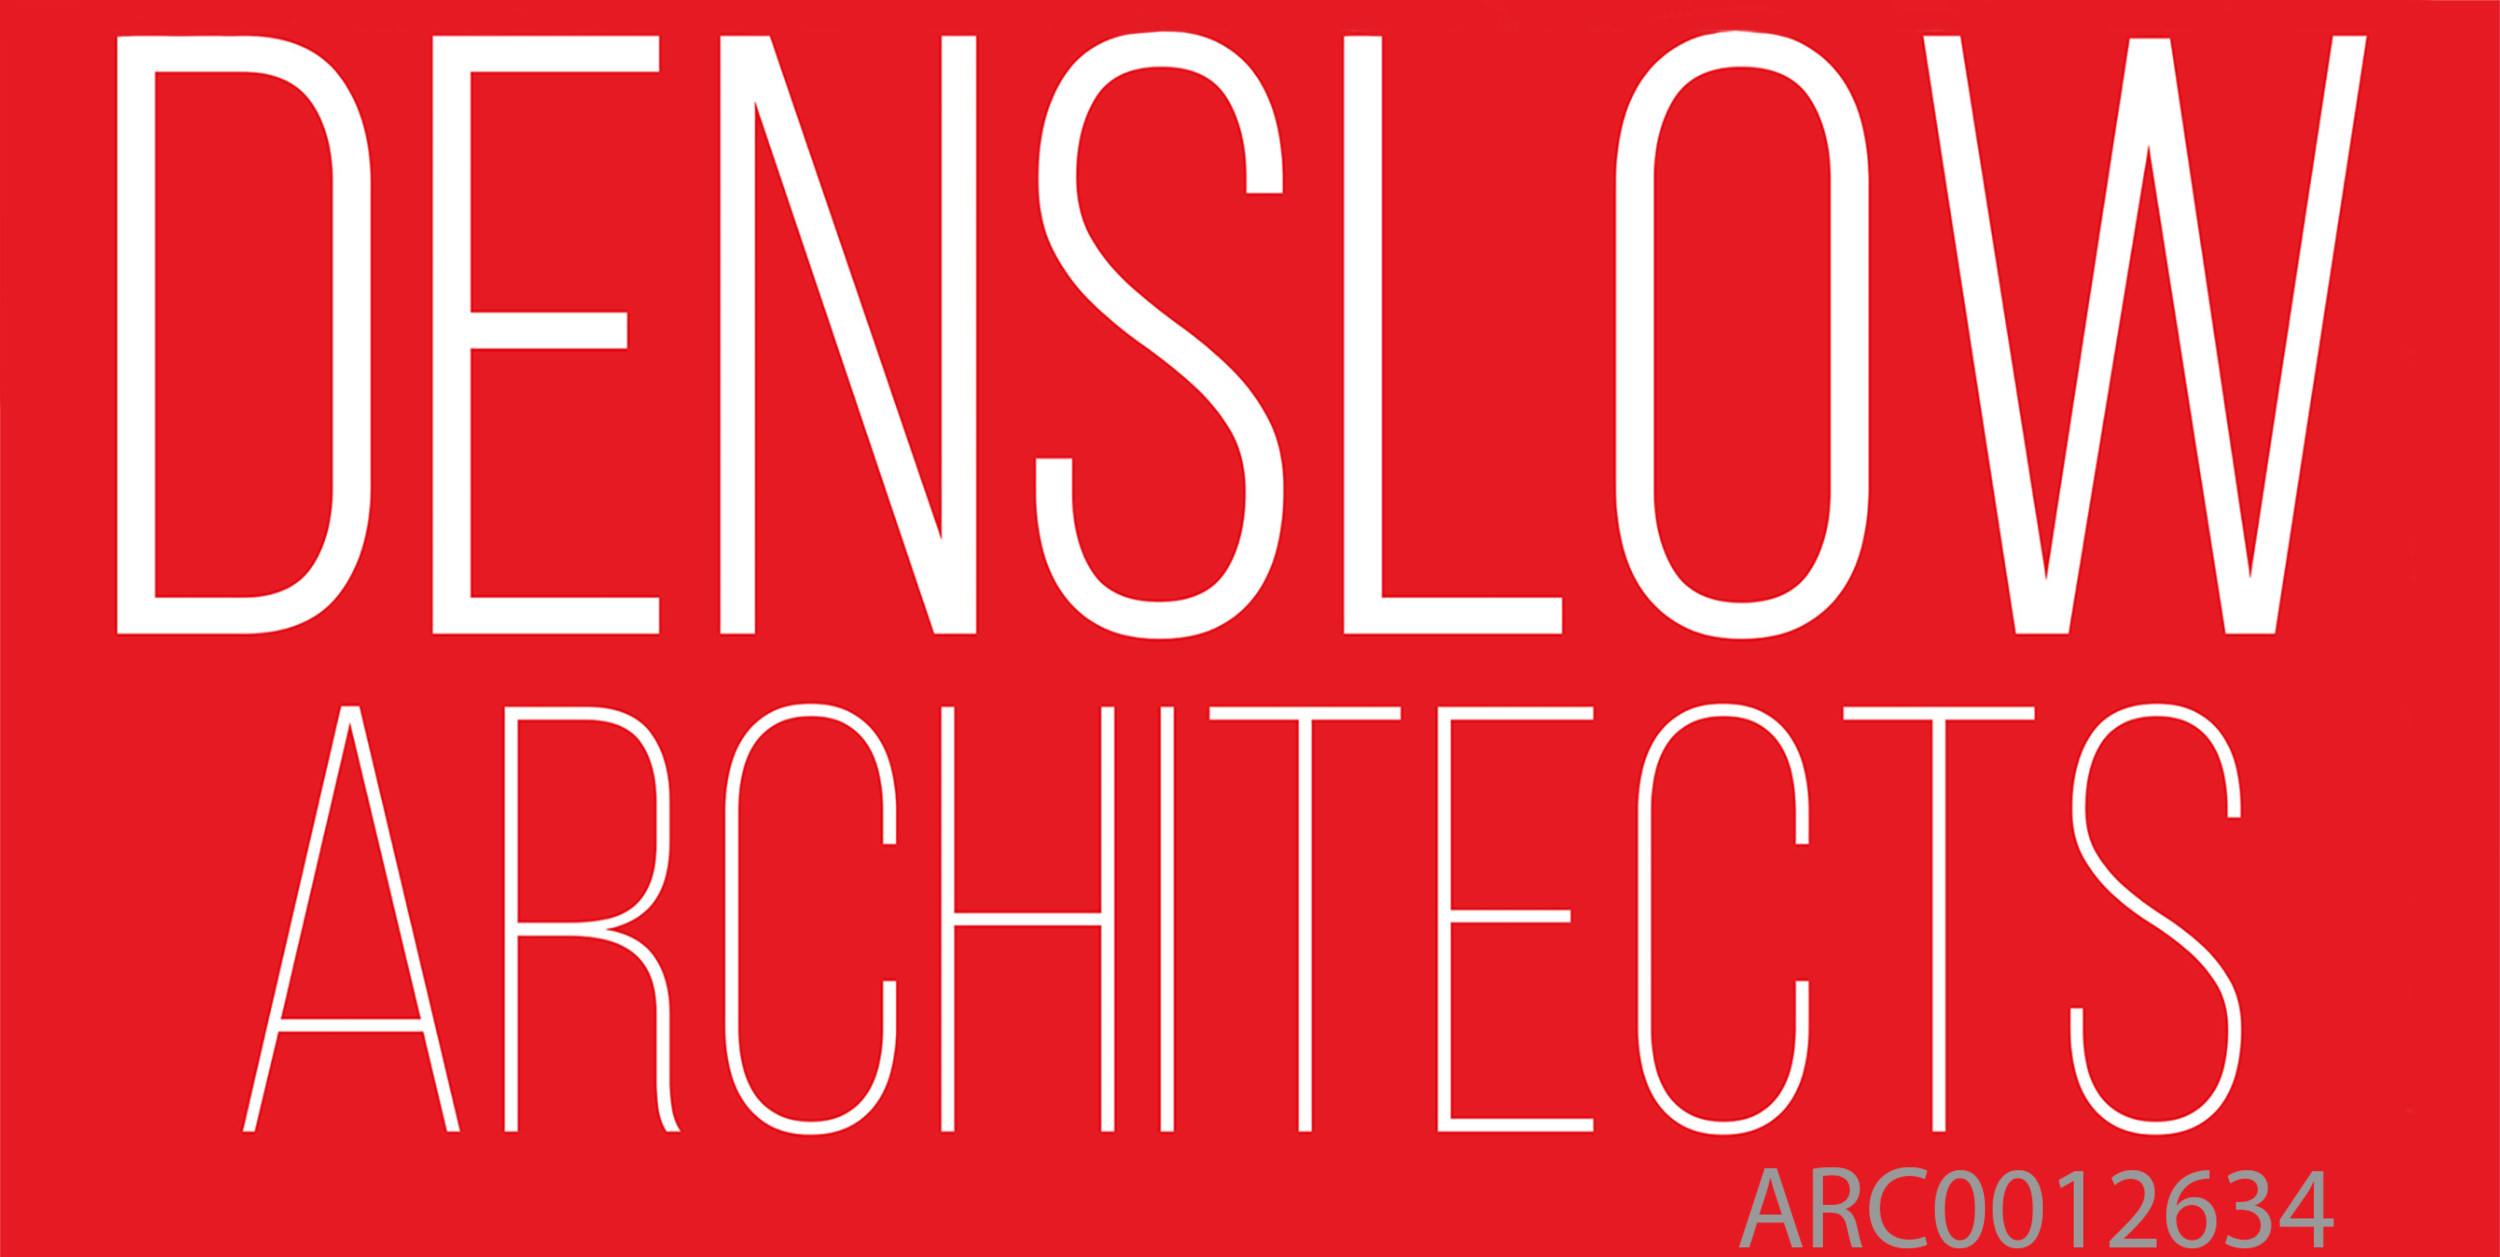 Denslow Architects